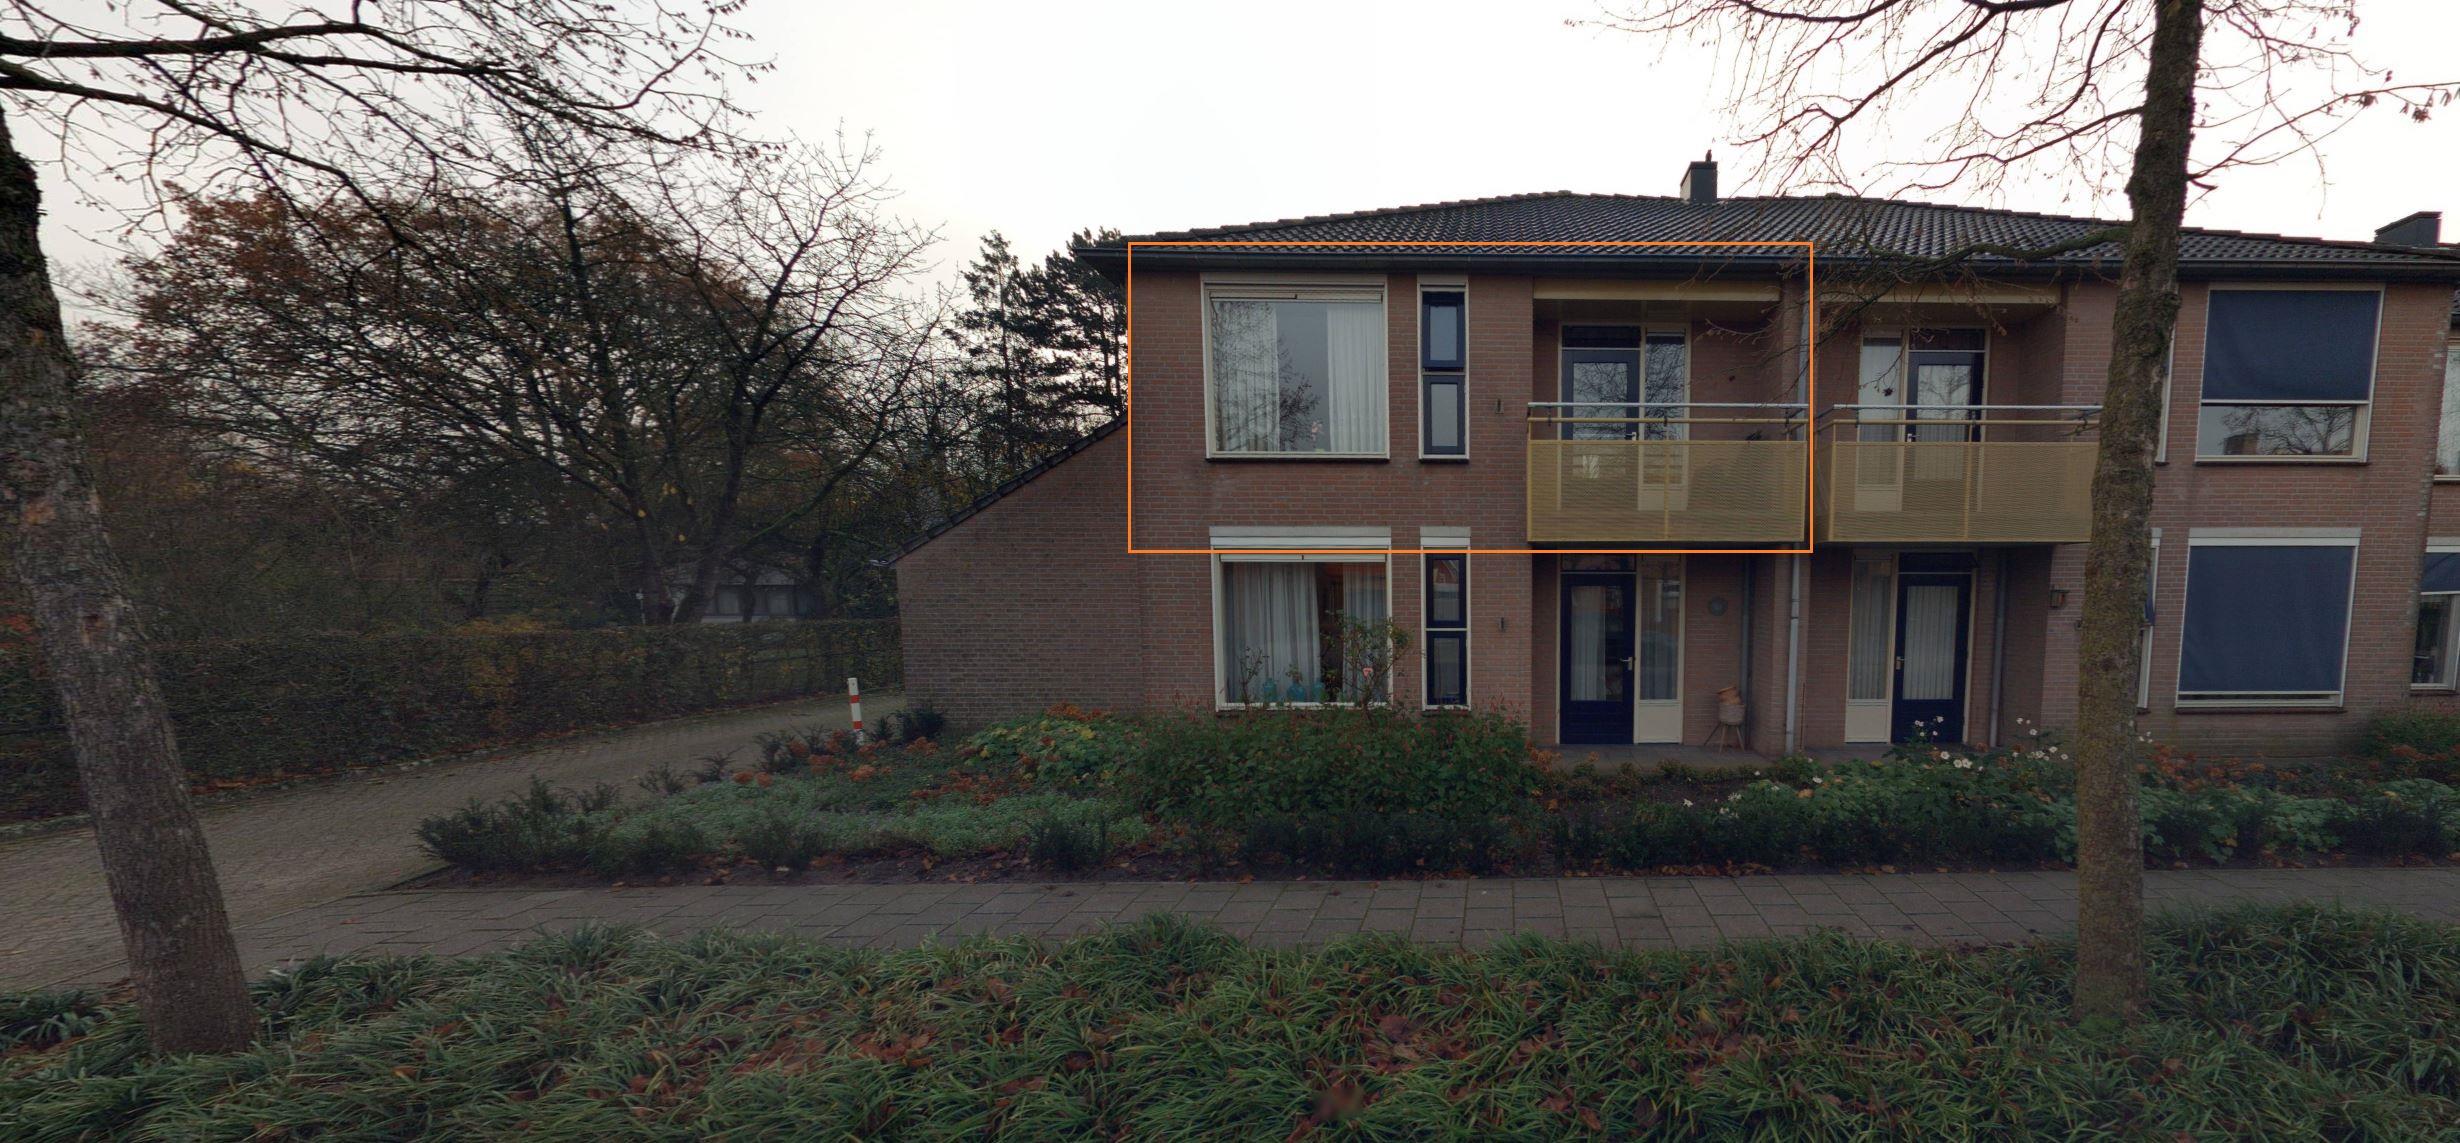 Asmunt 31, 5236 AS 's-Hertogenbosch, Nederland